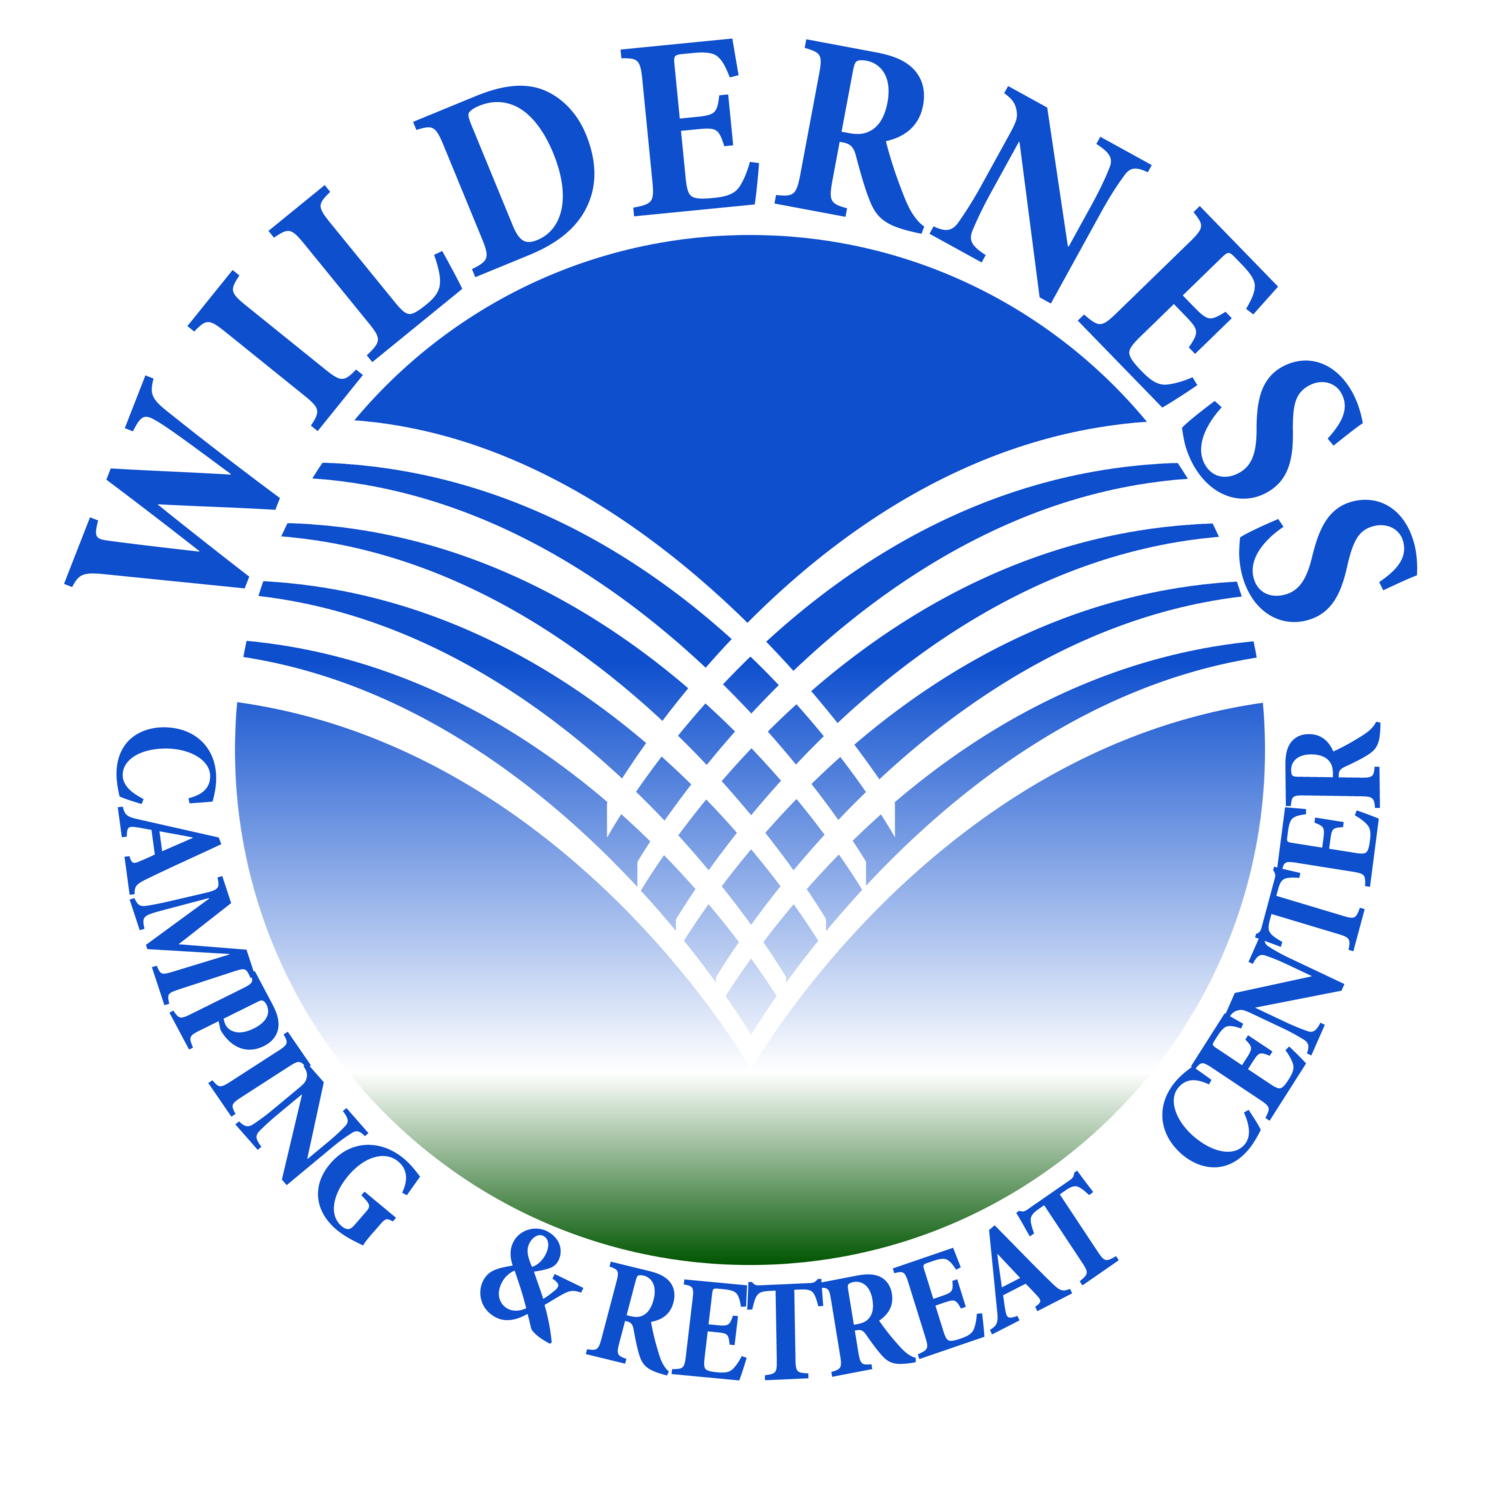 Wilderness Camping & Retreat Center